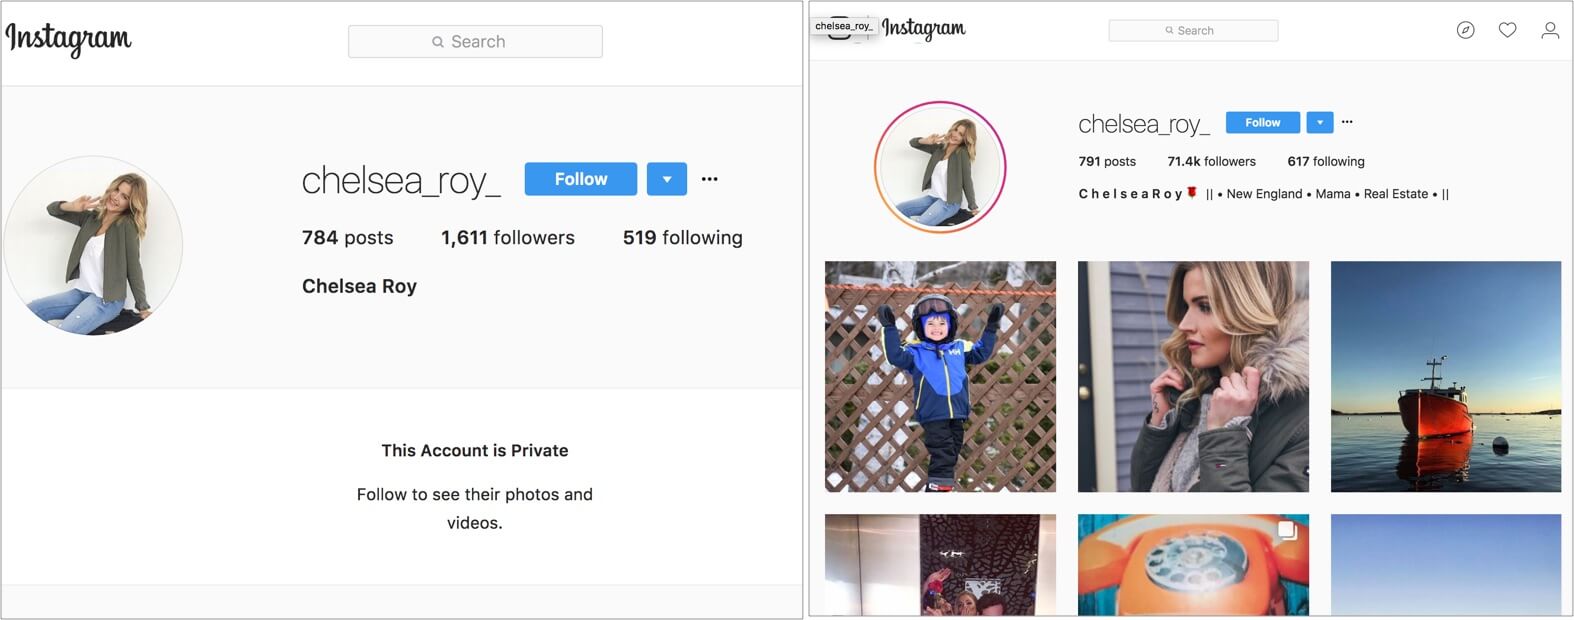 Chelsea Instagram Followers on The Bachelor